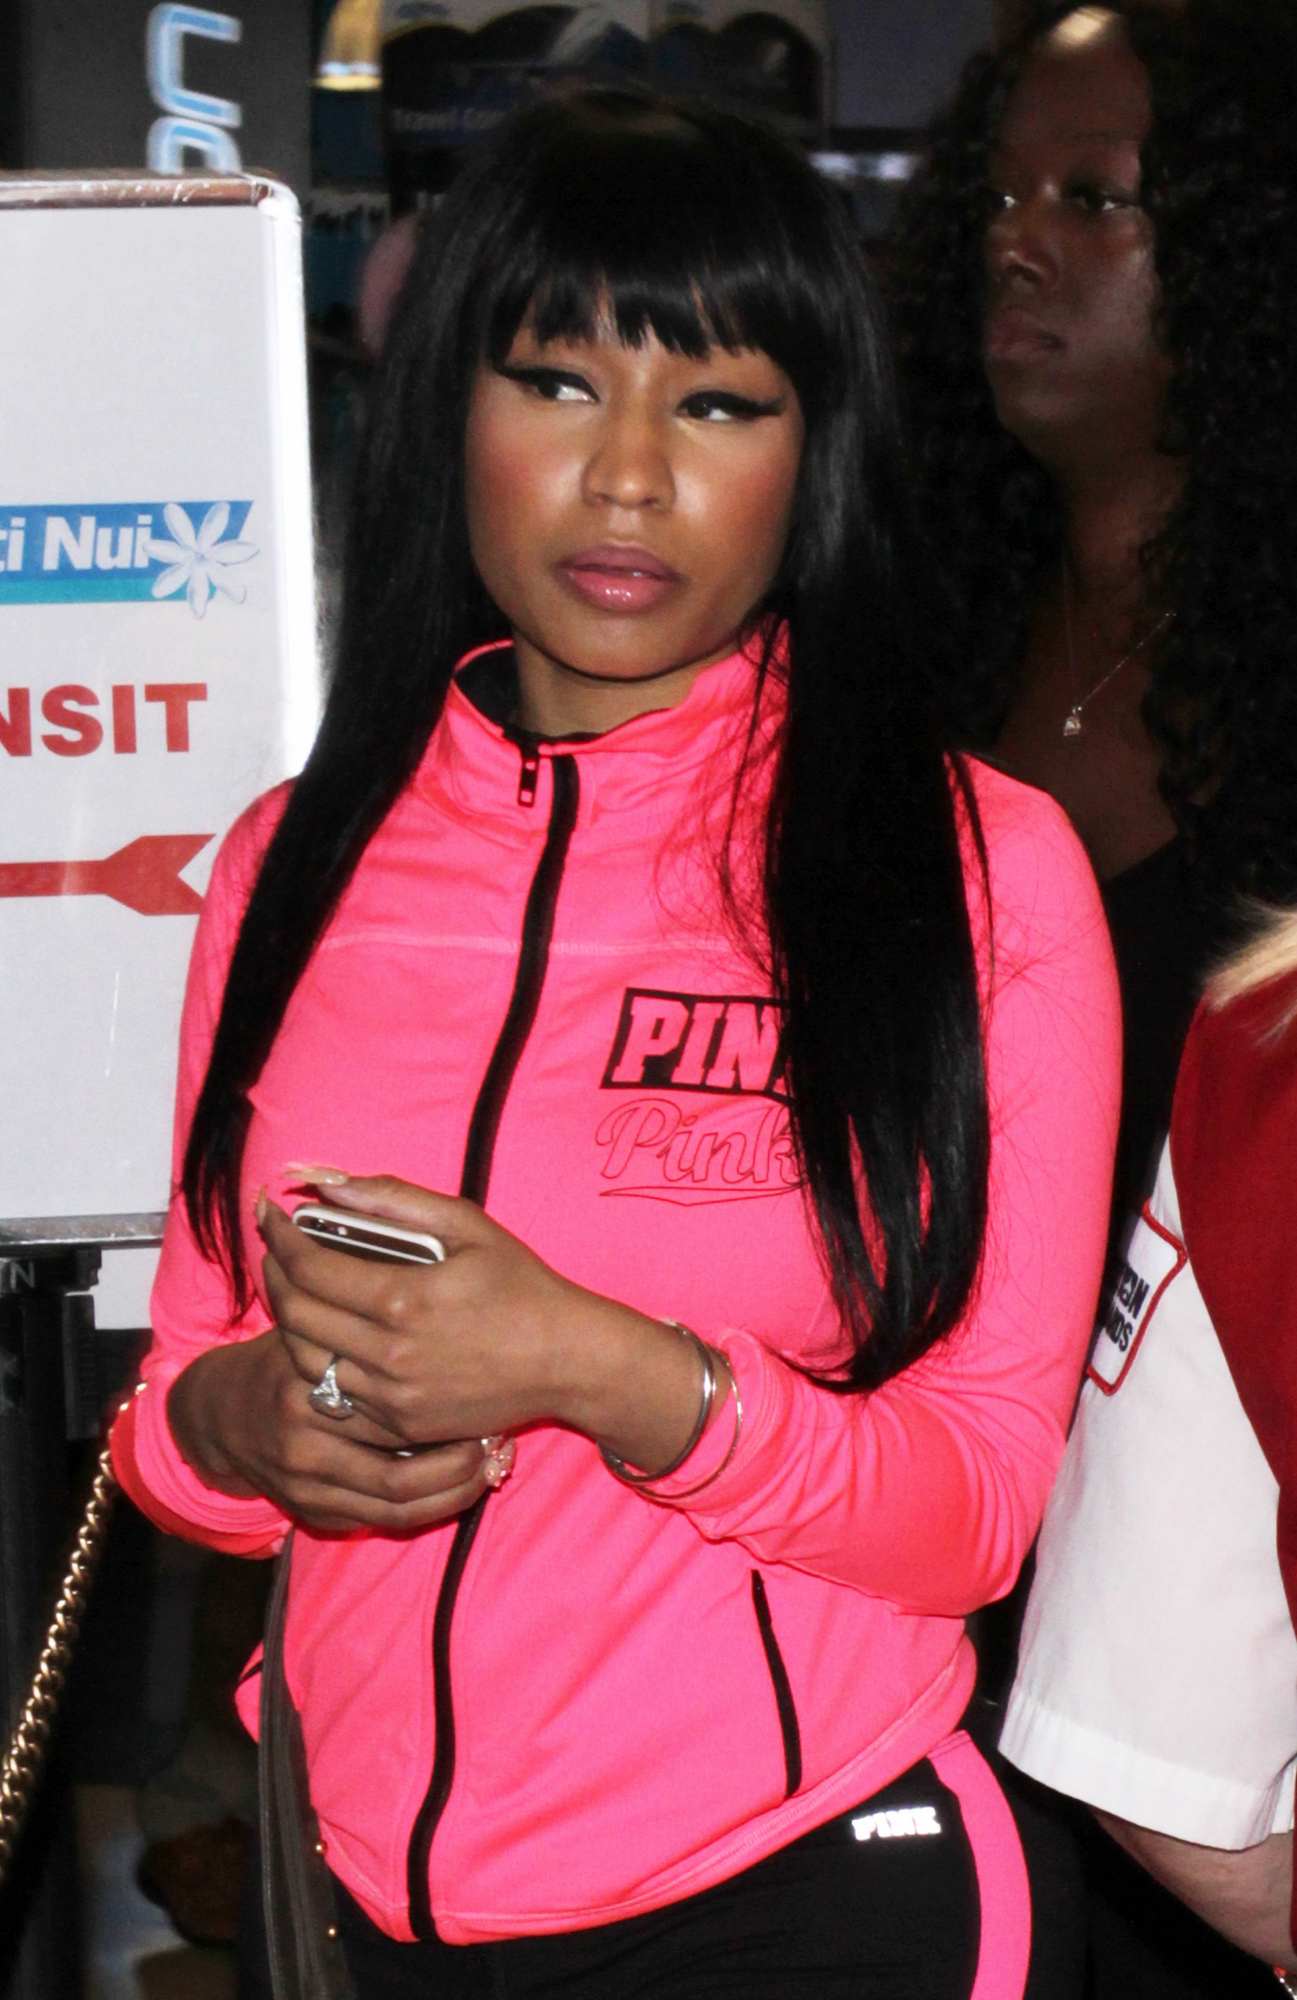 Nicki Minaj Seen in Hot Pink Track Arrives at LAX Airport